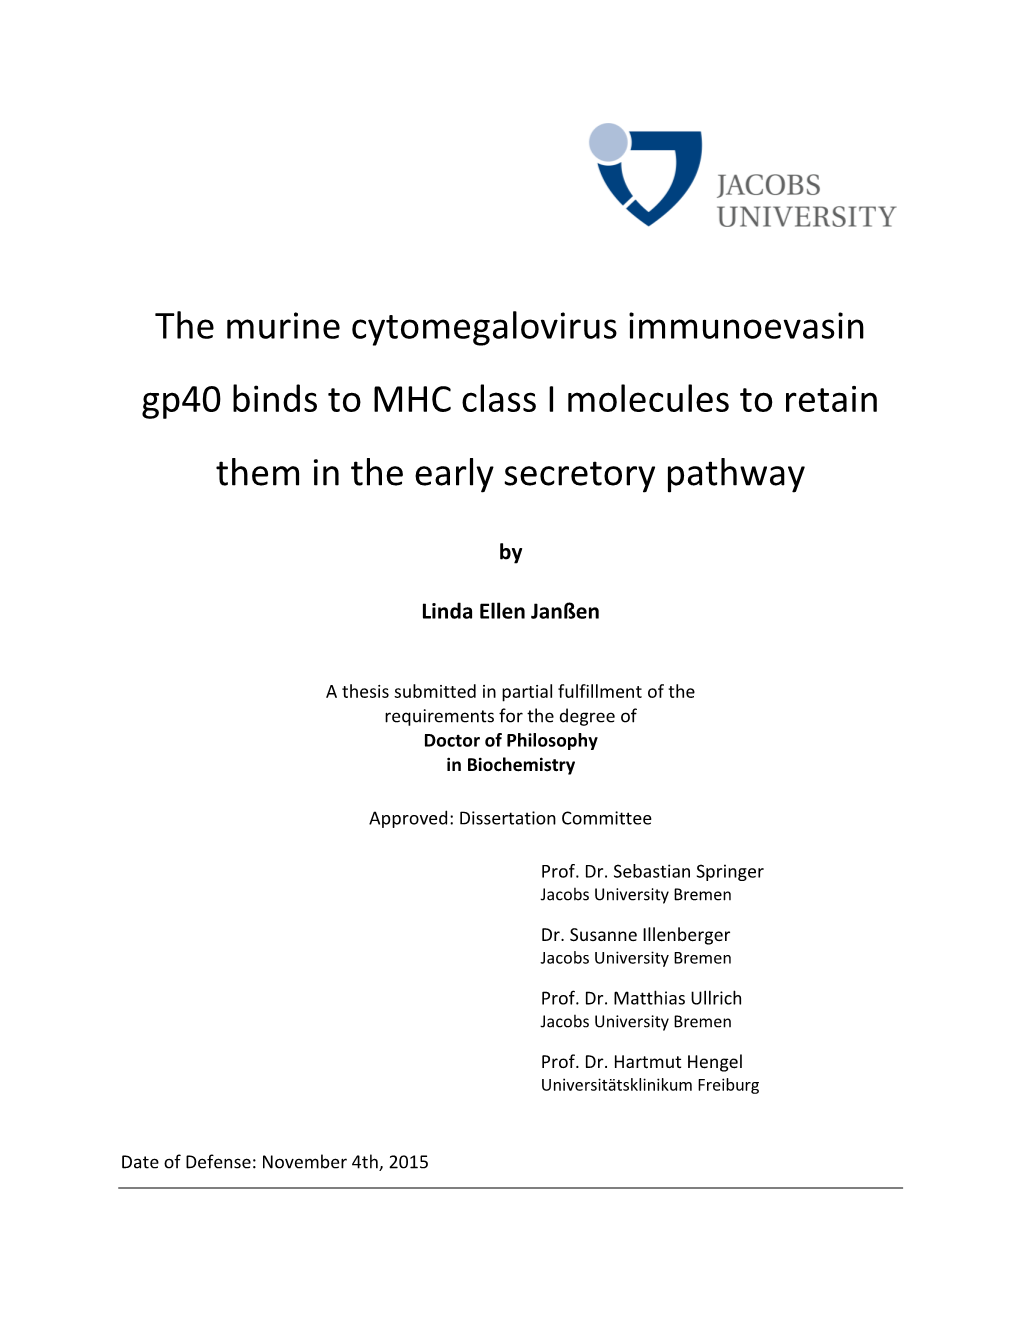 The Murine Cytomegalovirus Immunoevasin Gp40 Binds to MHC Class I Molecules to Retain Them in the Early Secretory Pathway